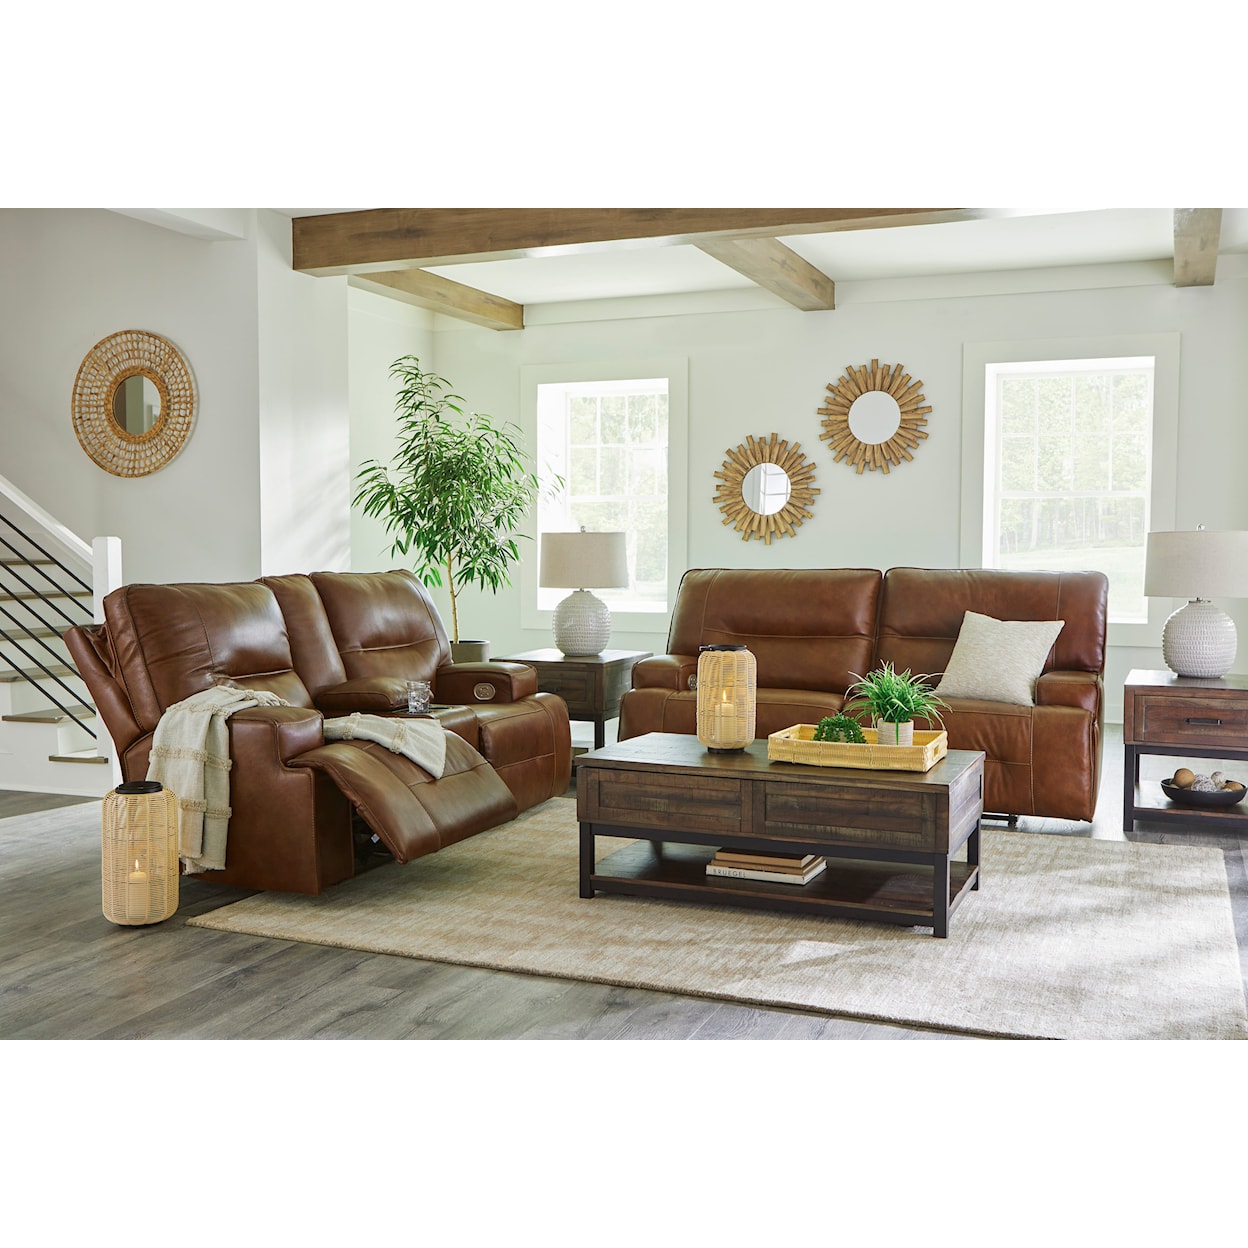 Ashley Furniture Signature Design Francesca Living Room Set